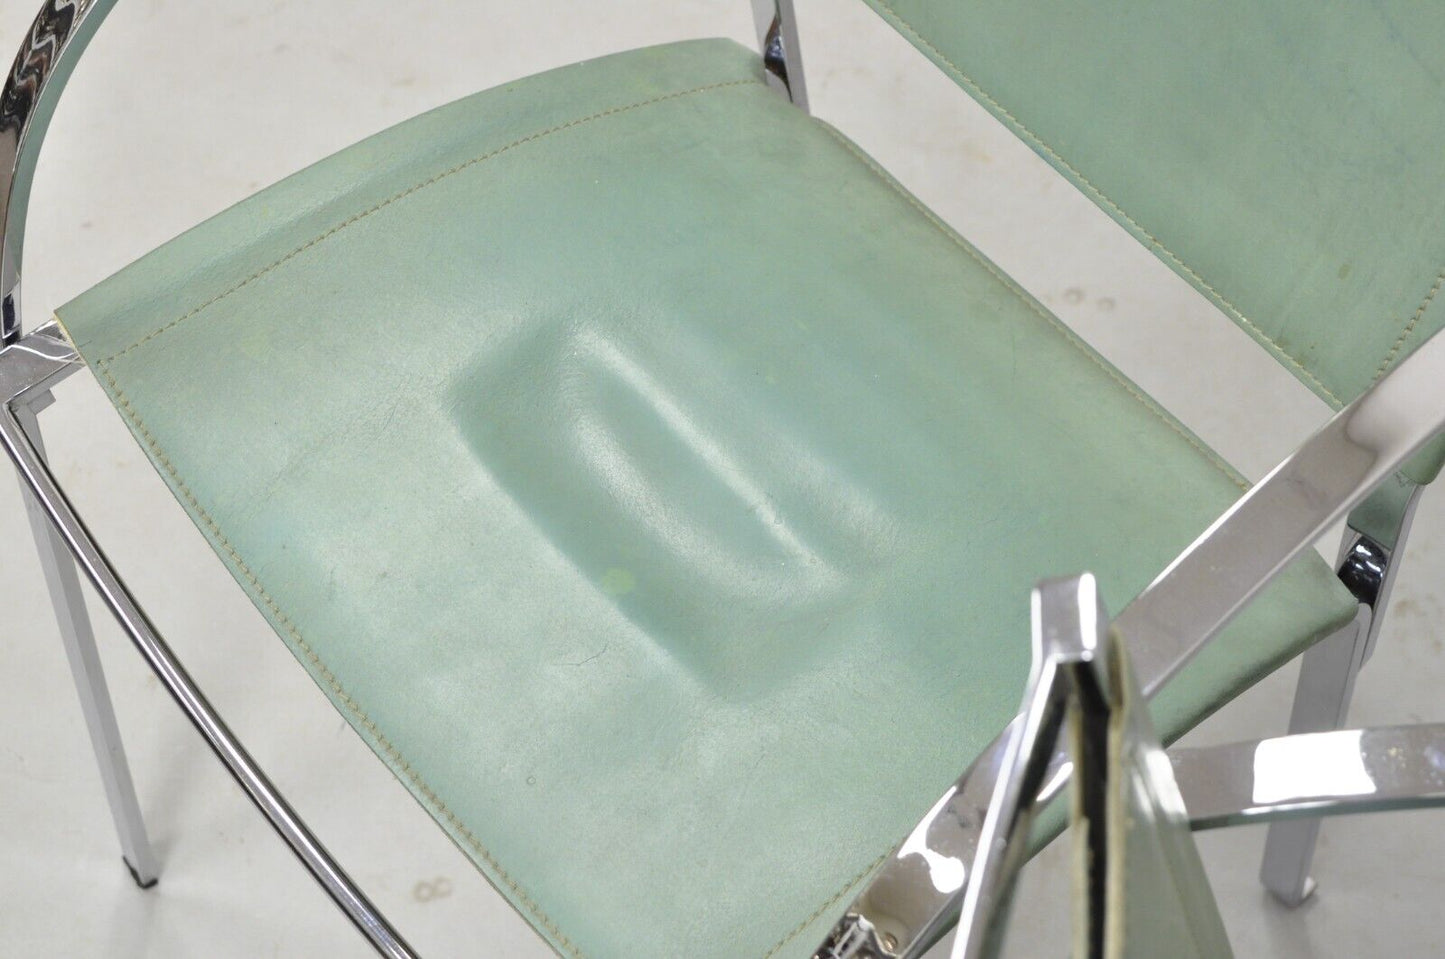 Italian Modern Naos Italy Teal Blue Leather Chrome "Corset" Arm Chairs - a Pair